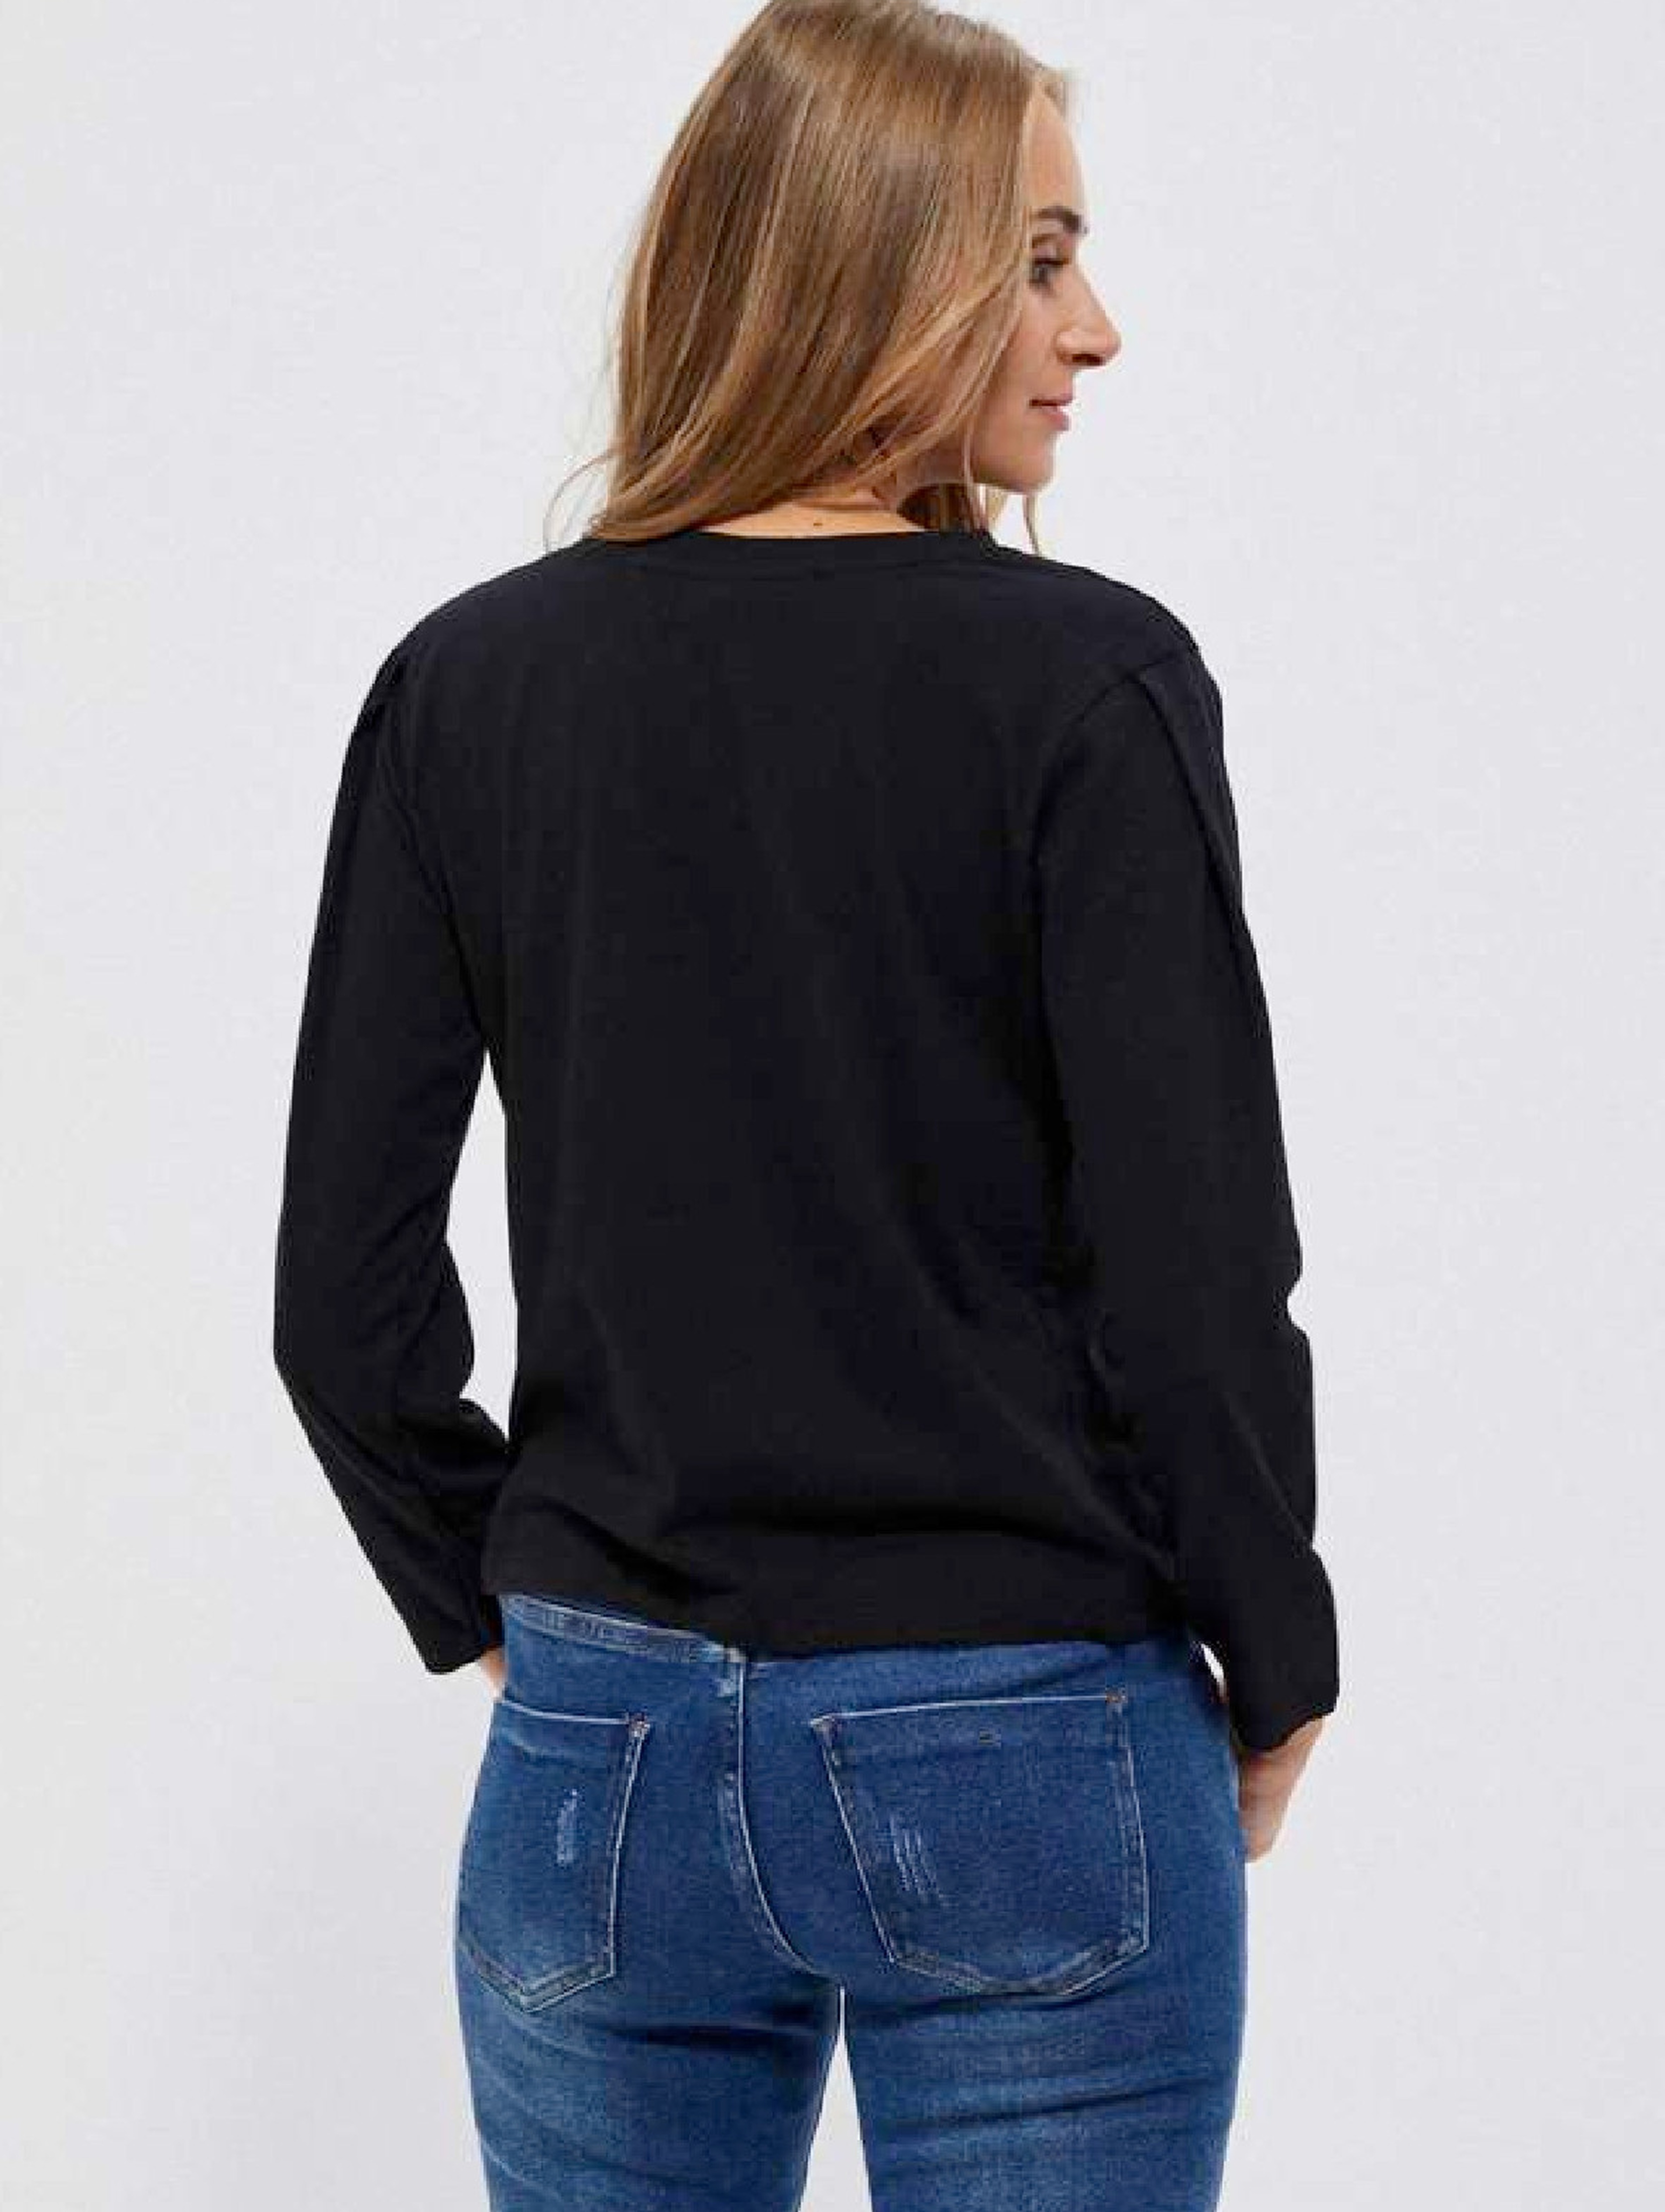 Czarna bluzka damska z bawełny typu longsleeve